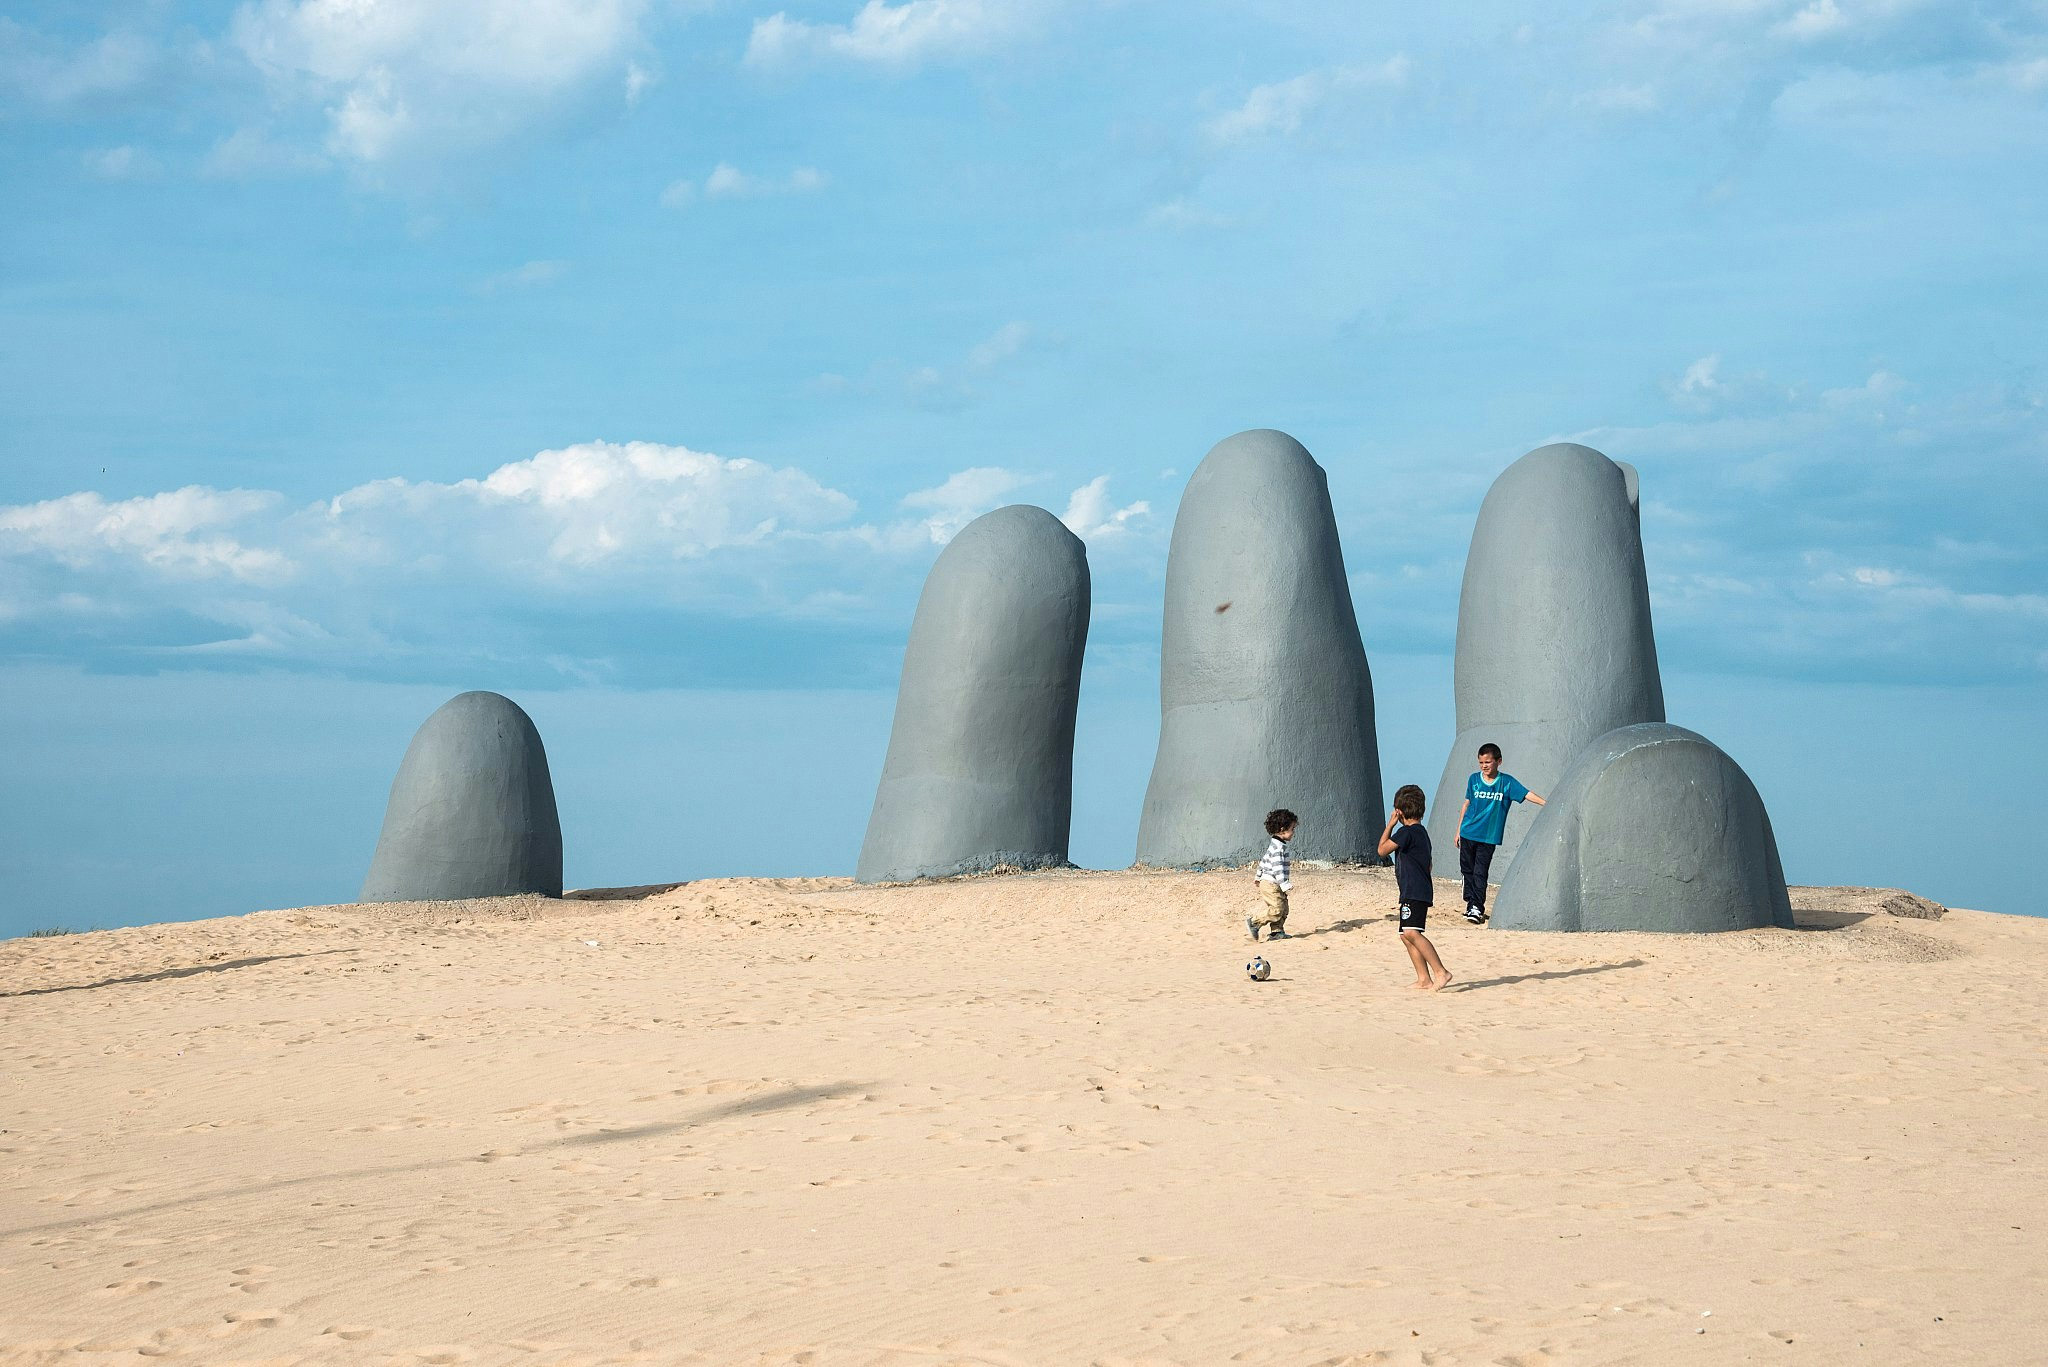 Three boys playing football next to La Mano en la Arena, a sculpture of a huge hand protruding from a sandy beach at Punta del Este, Uruguay.